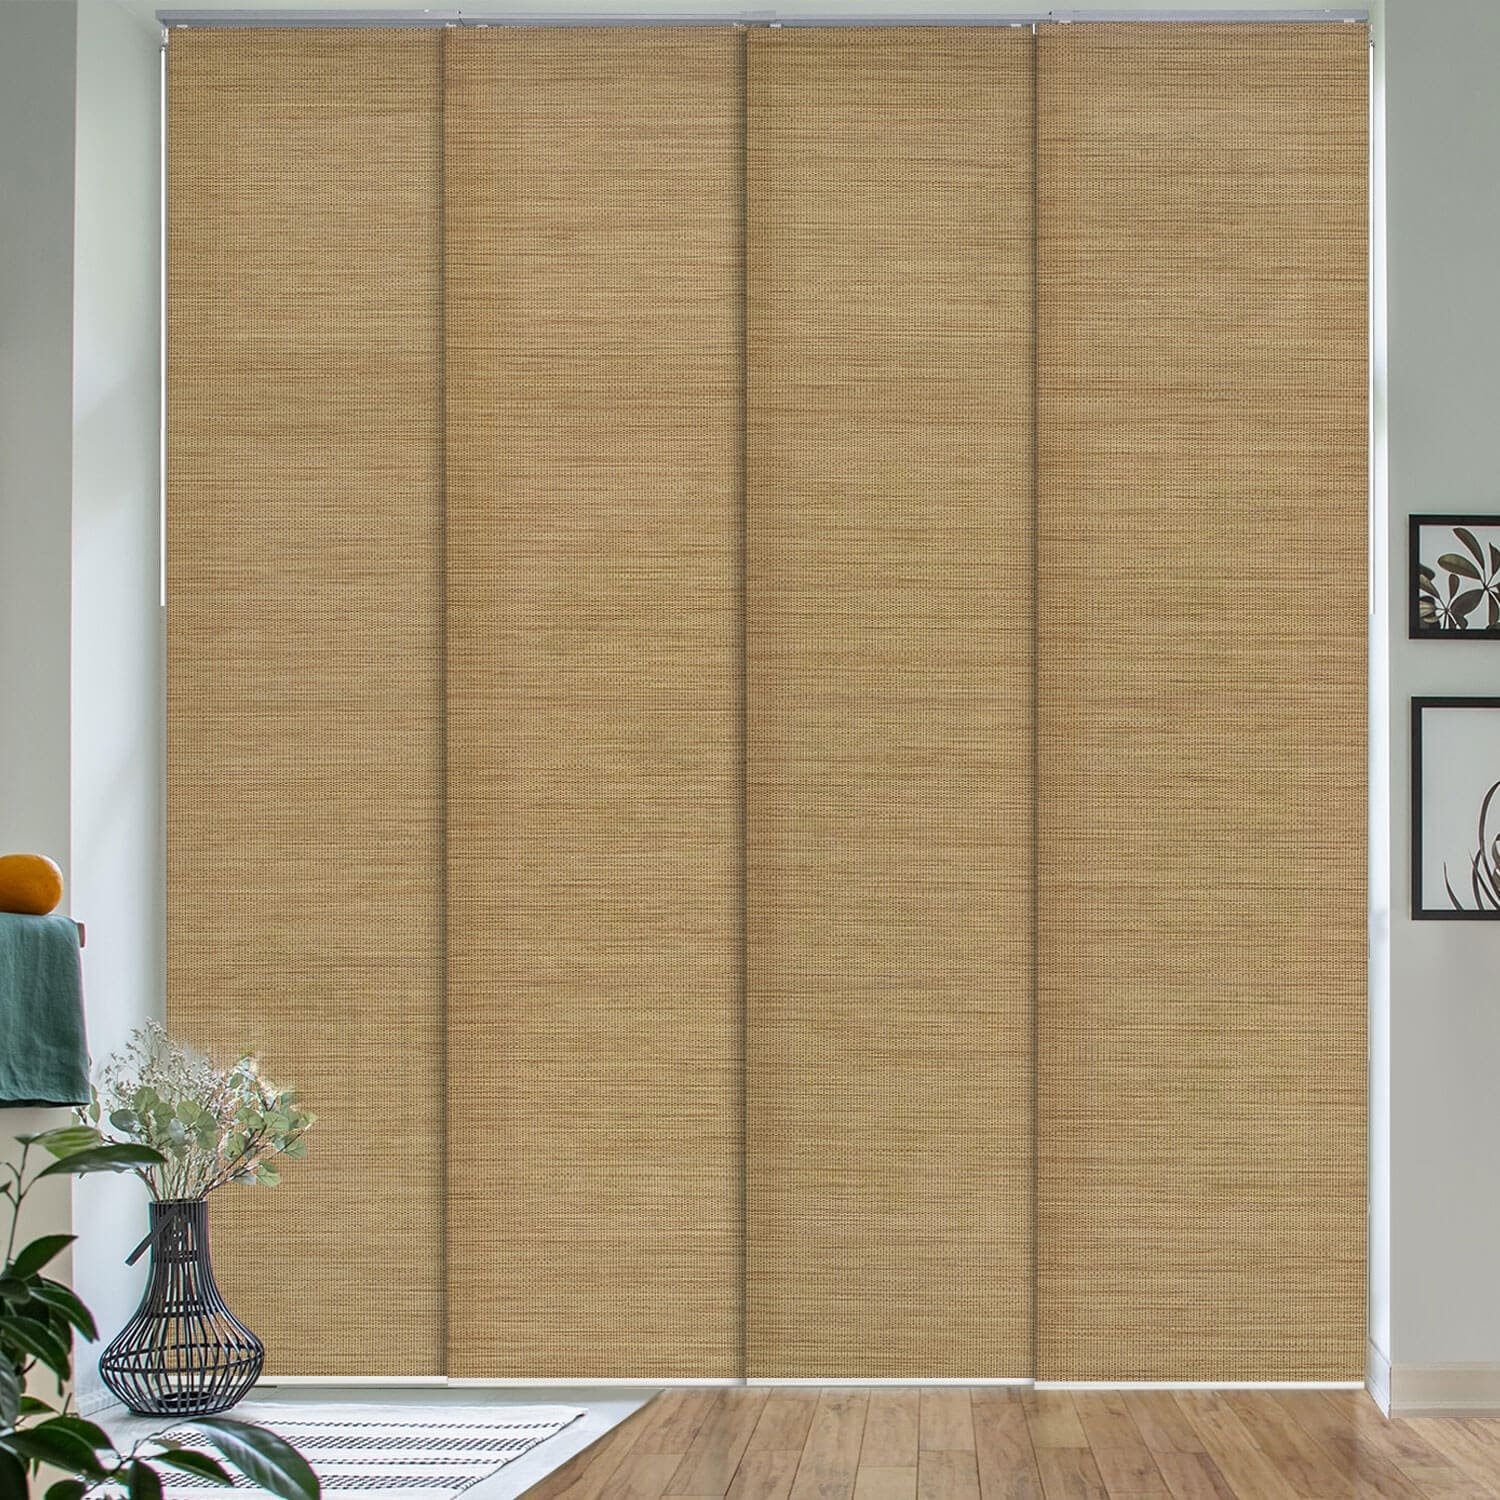  Woven Bamboo Mat Board 48 W x 96 L : Home & Kitchen